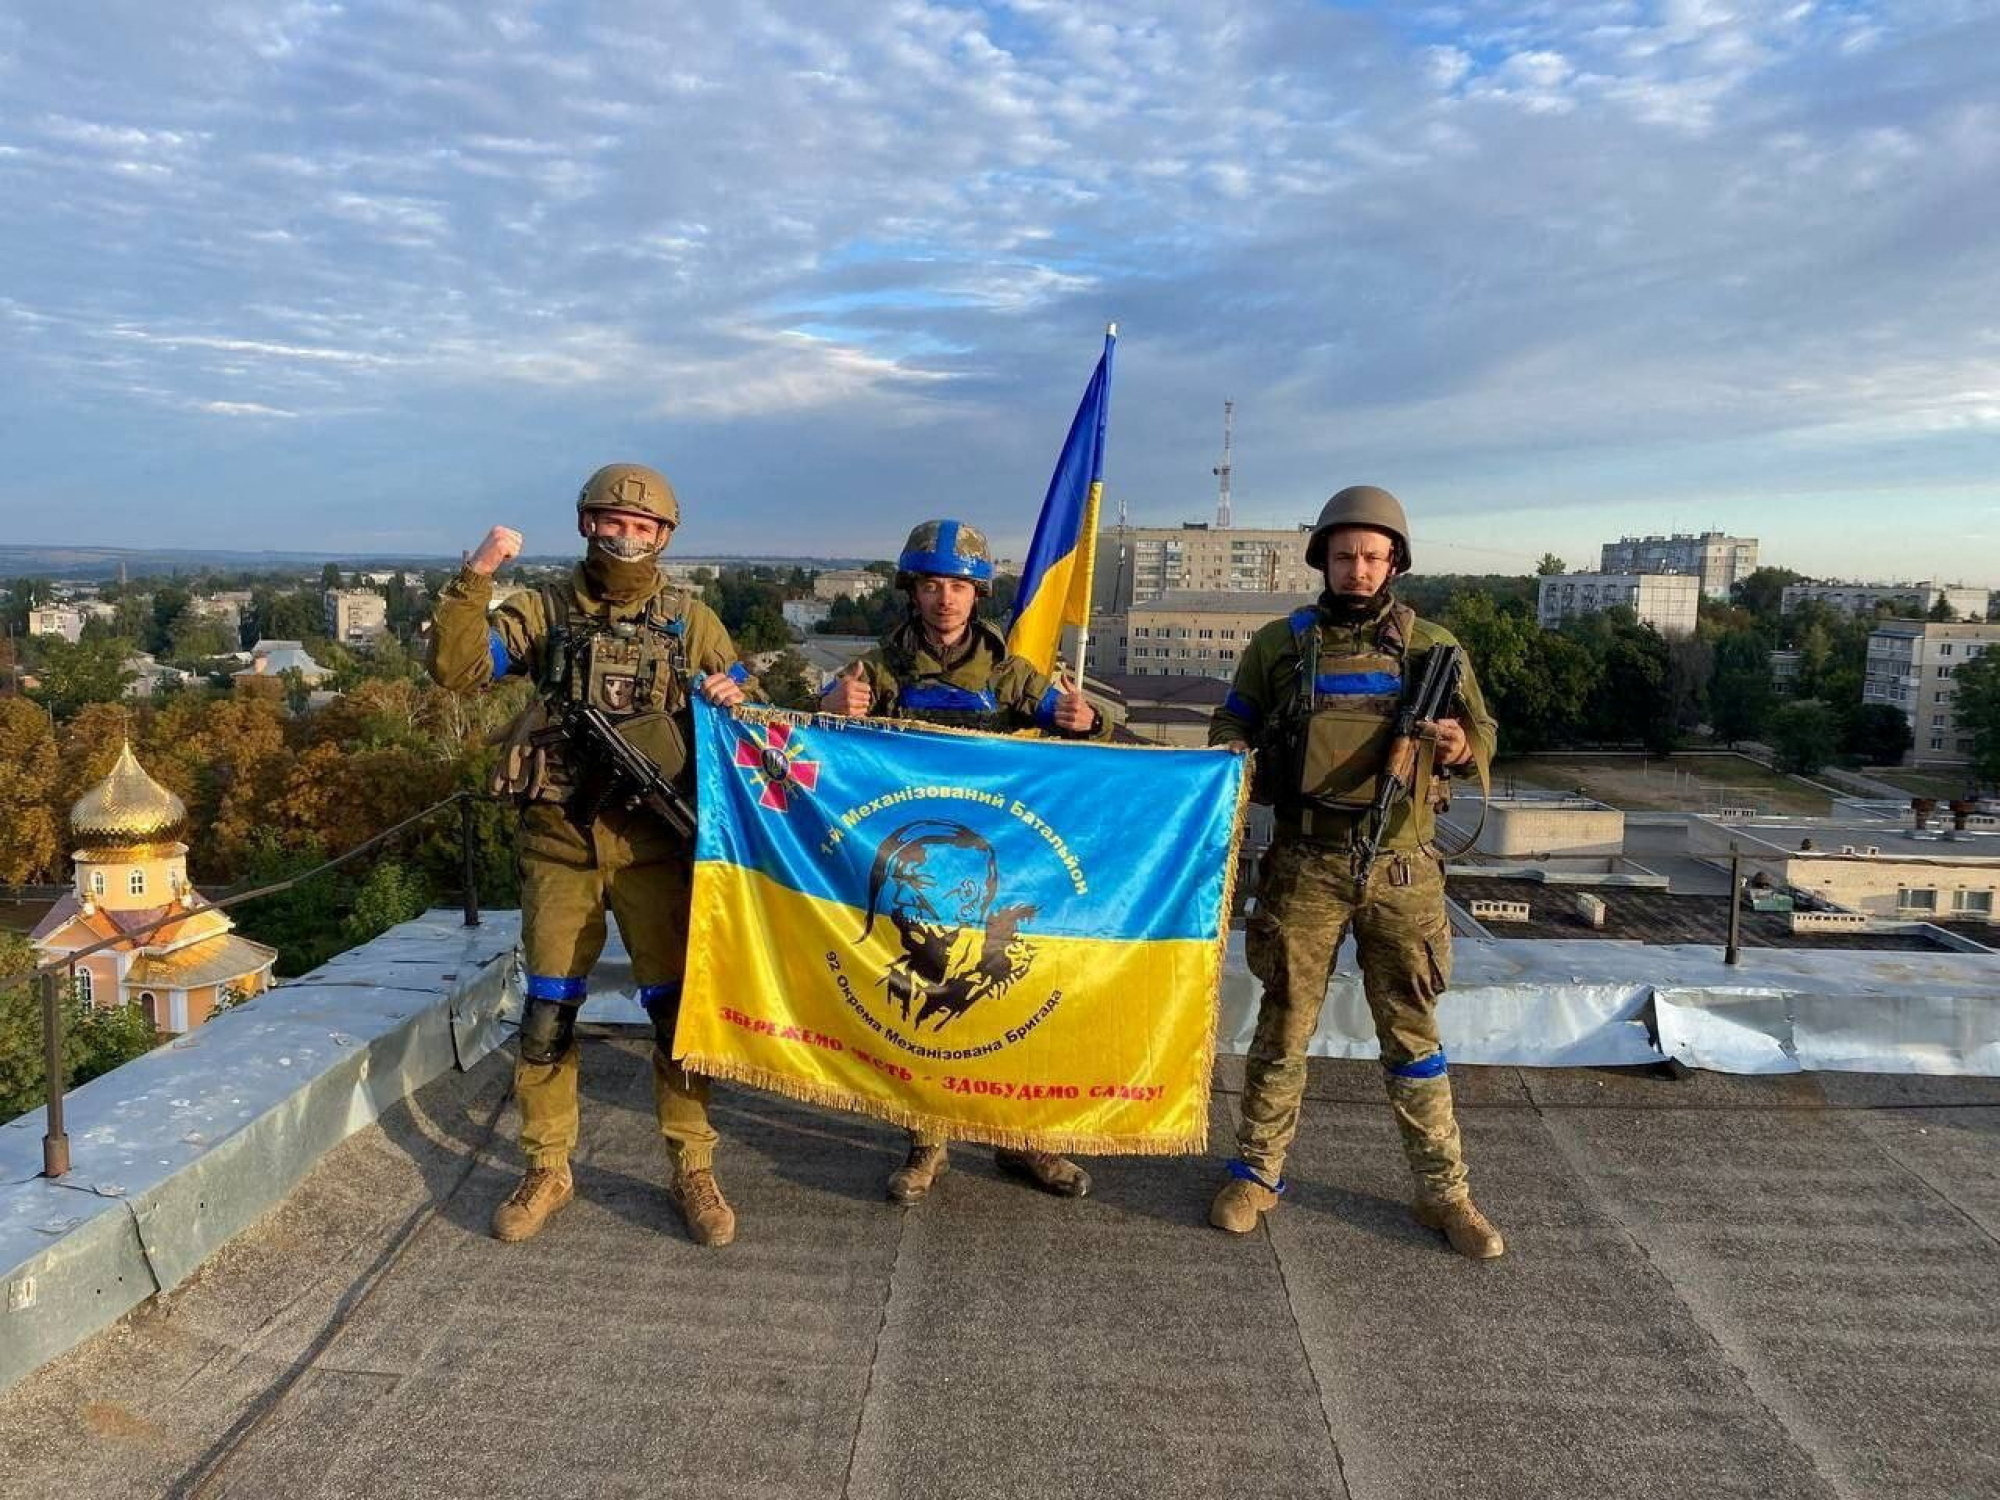 Украинцы захватили белгород